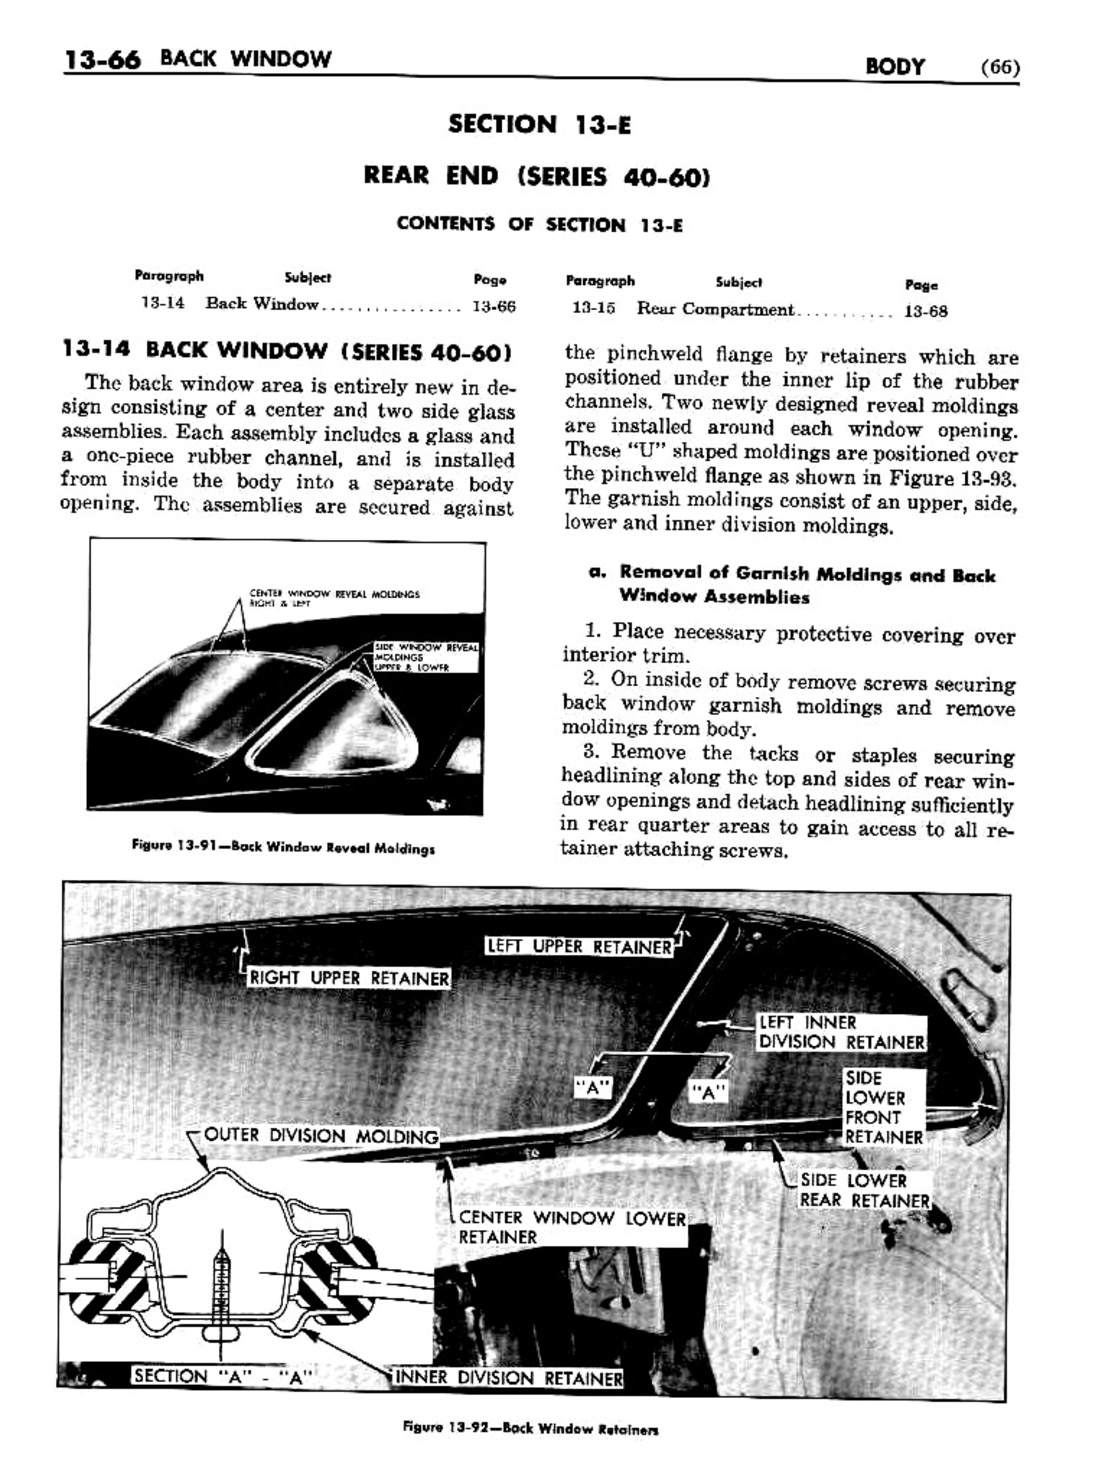 n_1957 Buick Body Service Manual-068-068.jpg